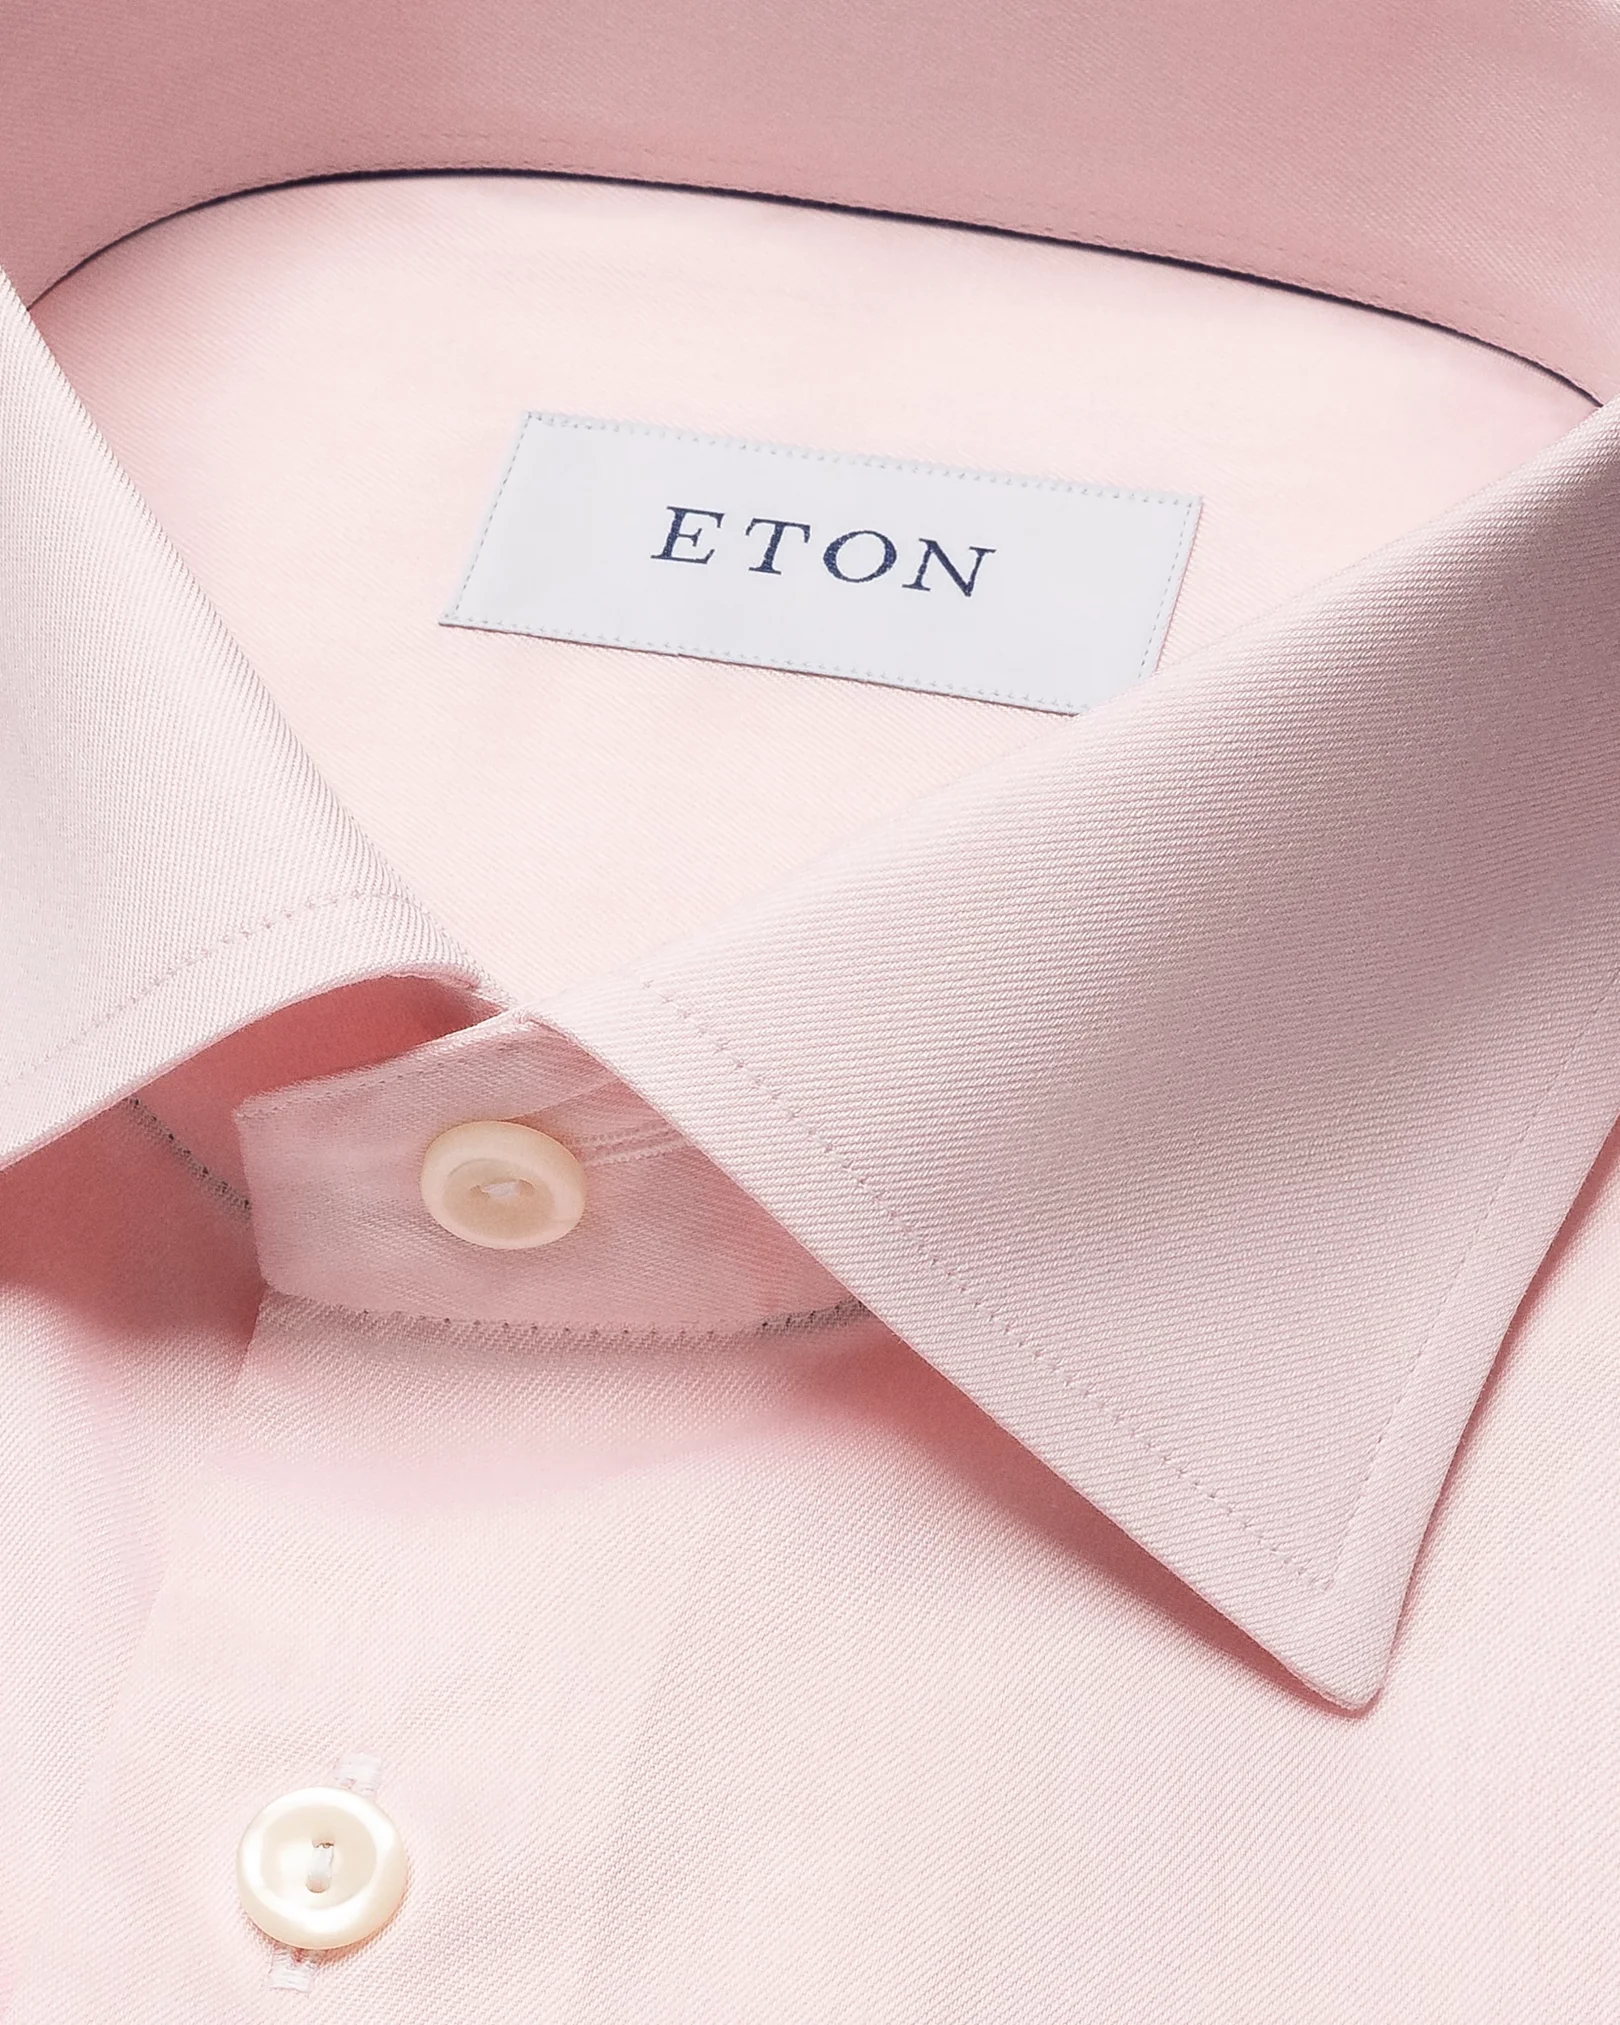 Eton - Pink Signature Twill Shirt